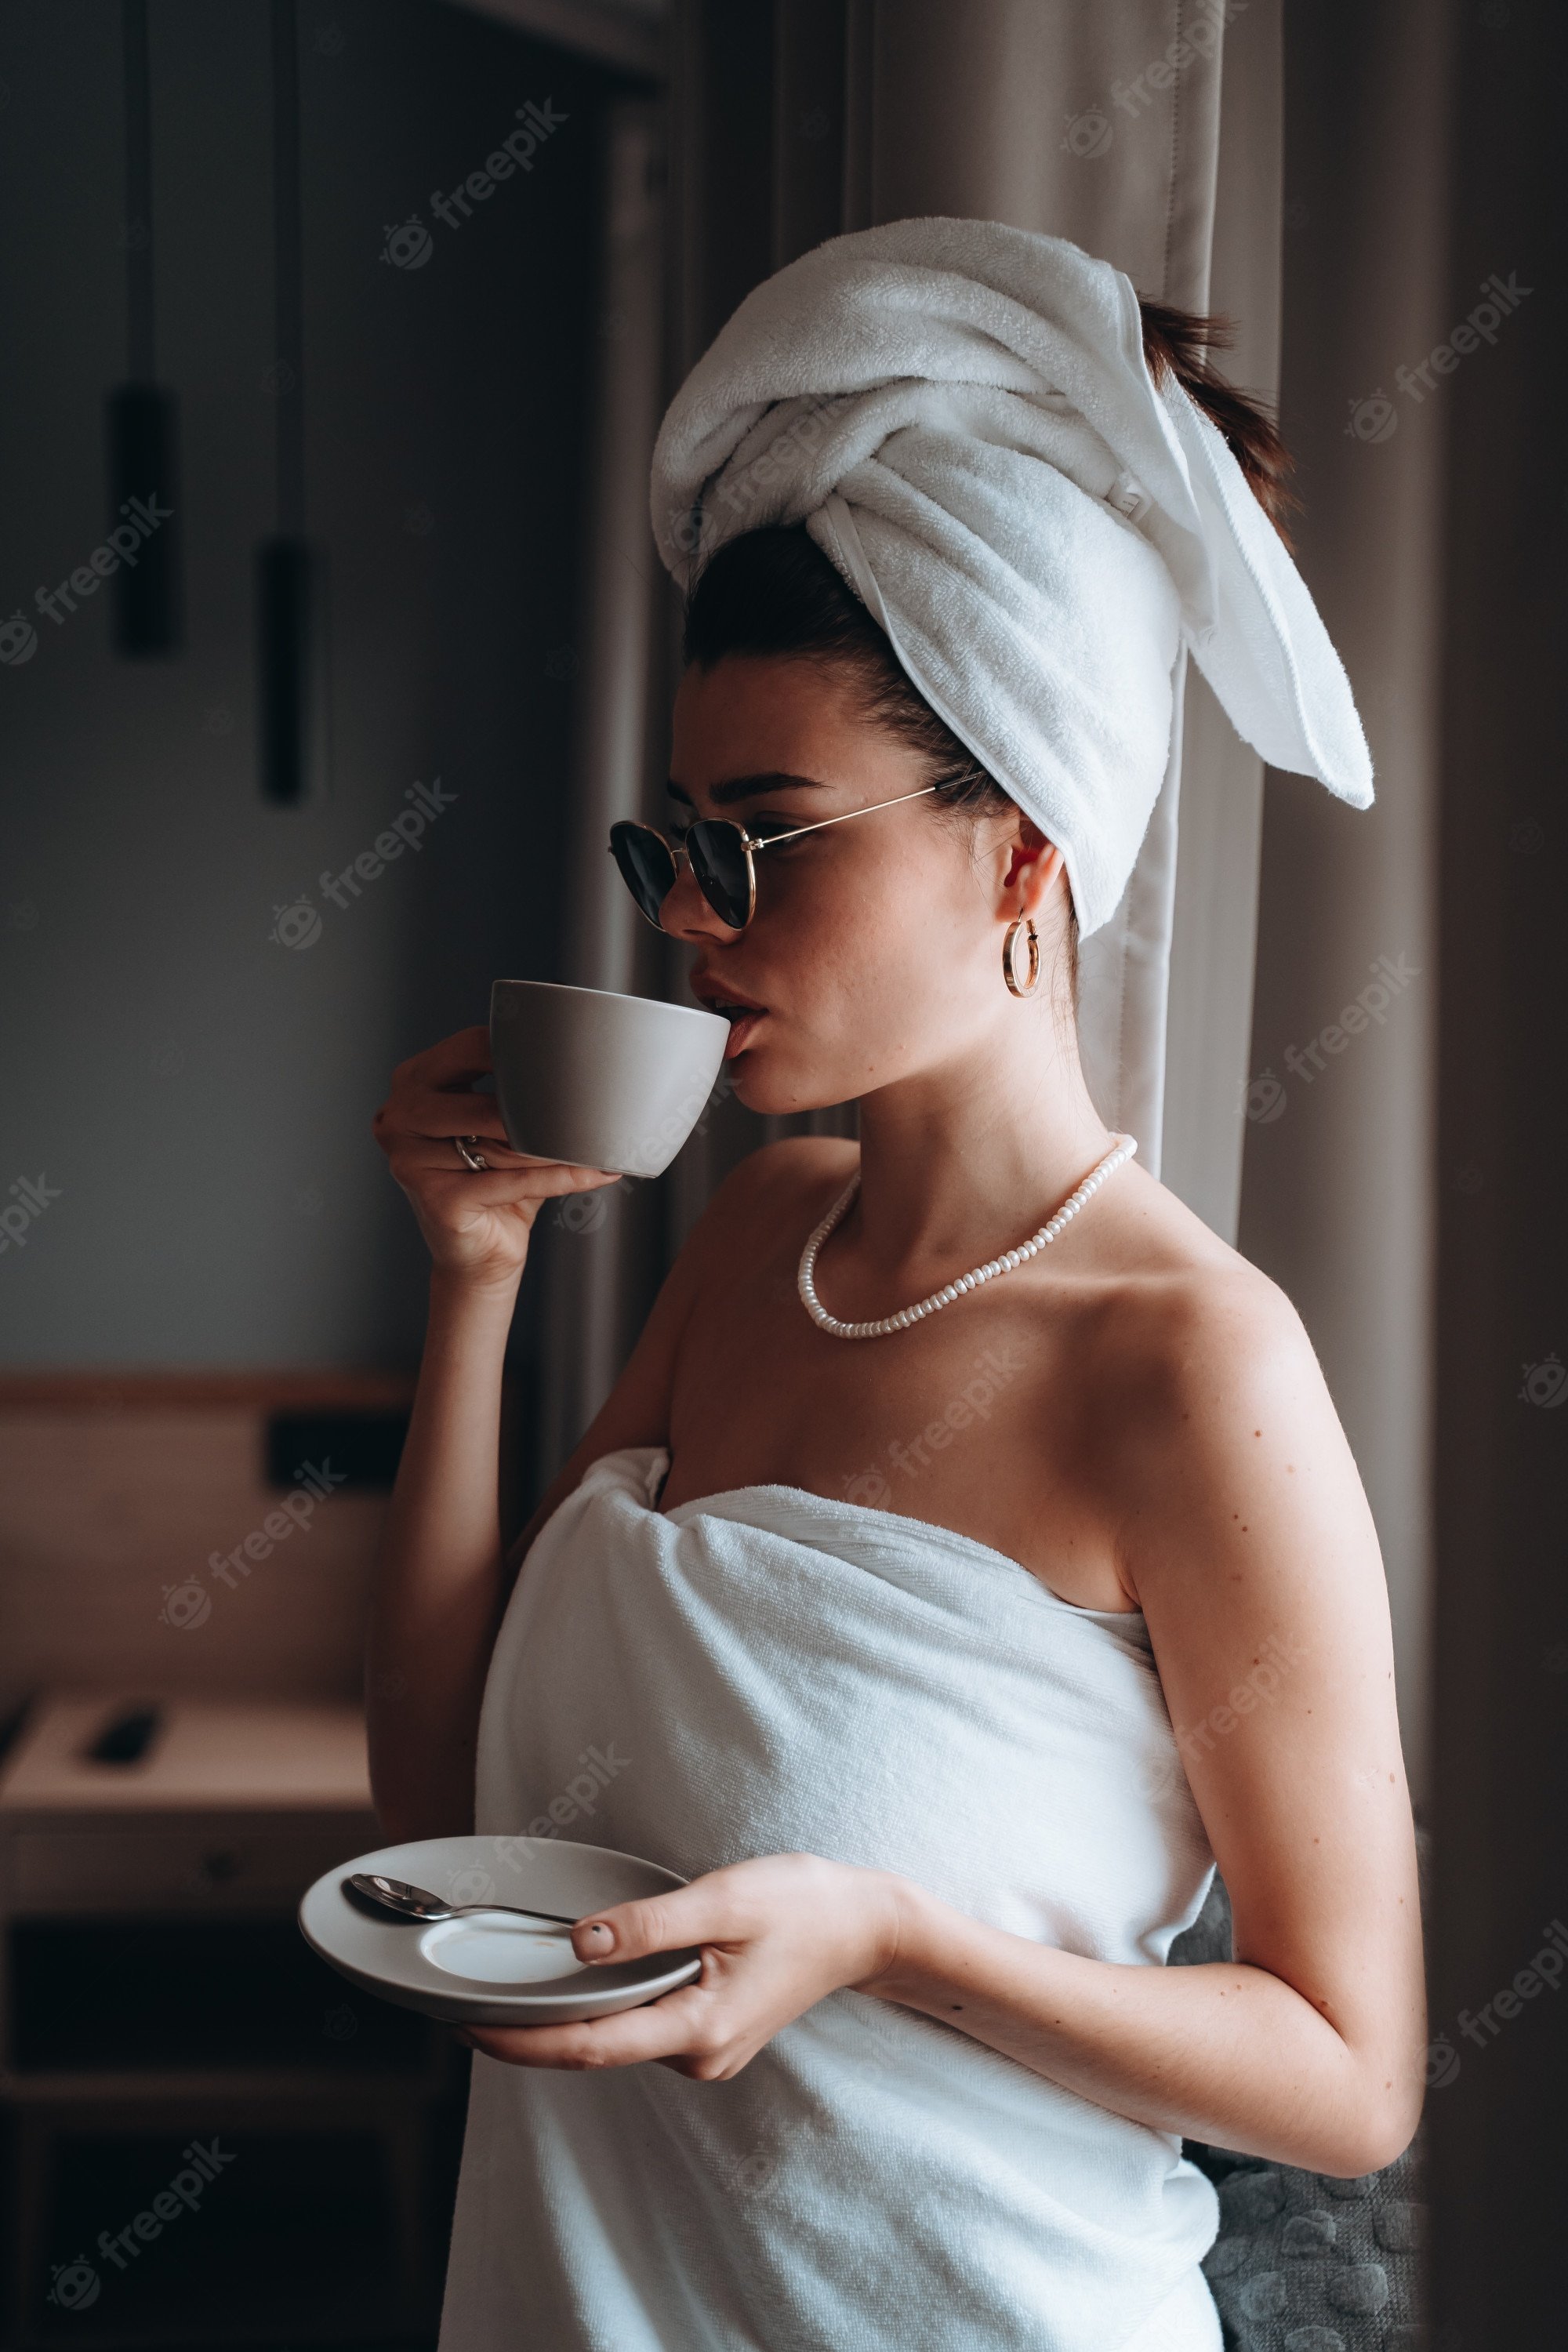 Женщина с полотенцем на голове. Девушка в полотенце. Фотосессия в полотенце. Фотосессия полотенце девушка. Девушка в полотенце фото